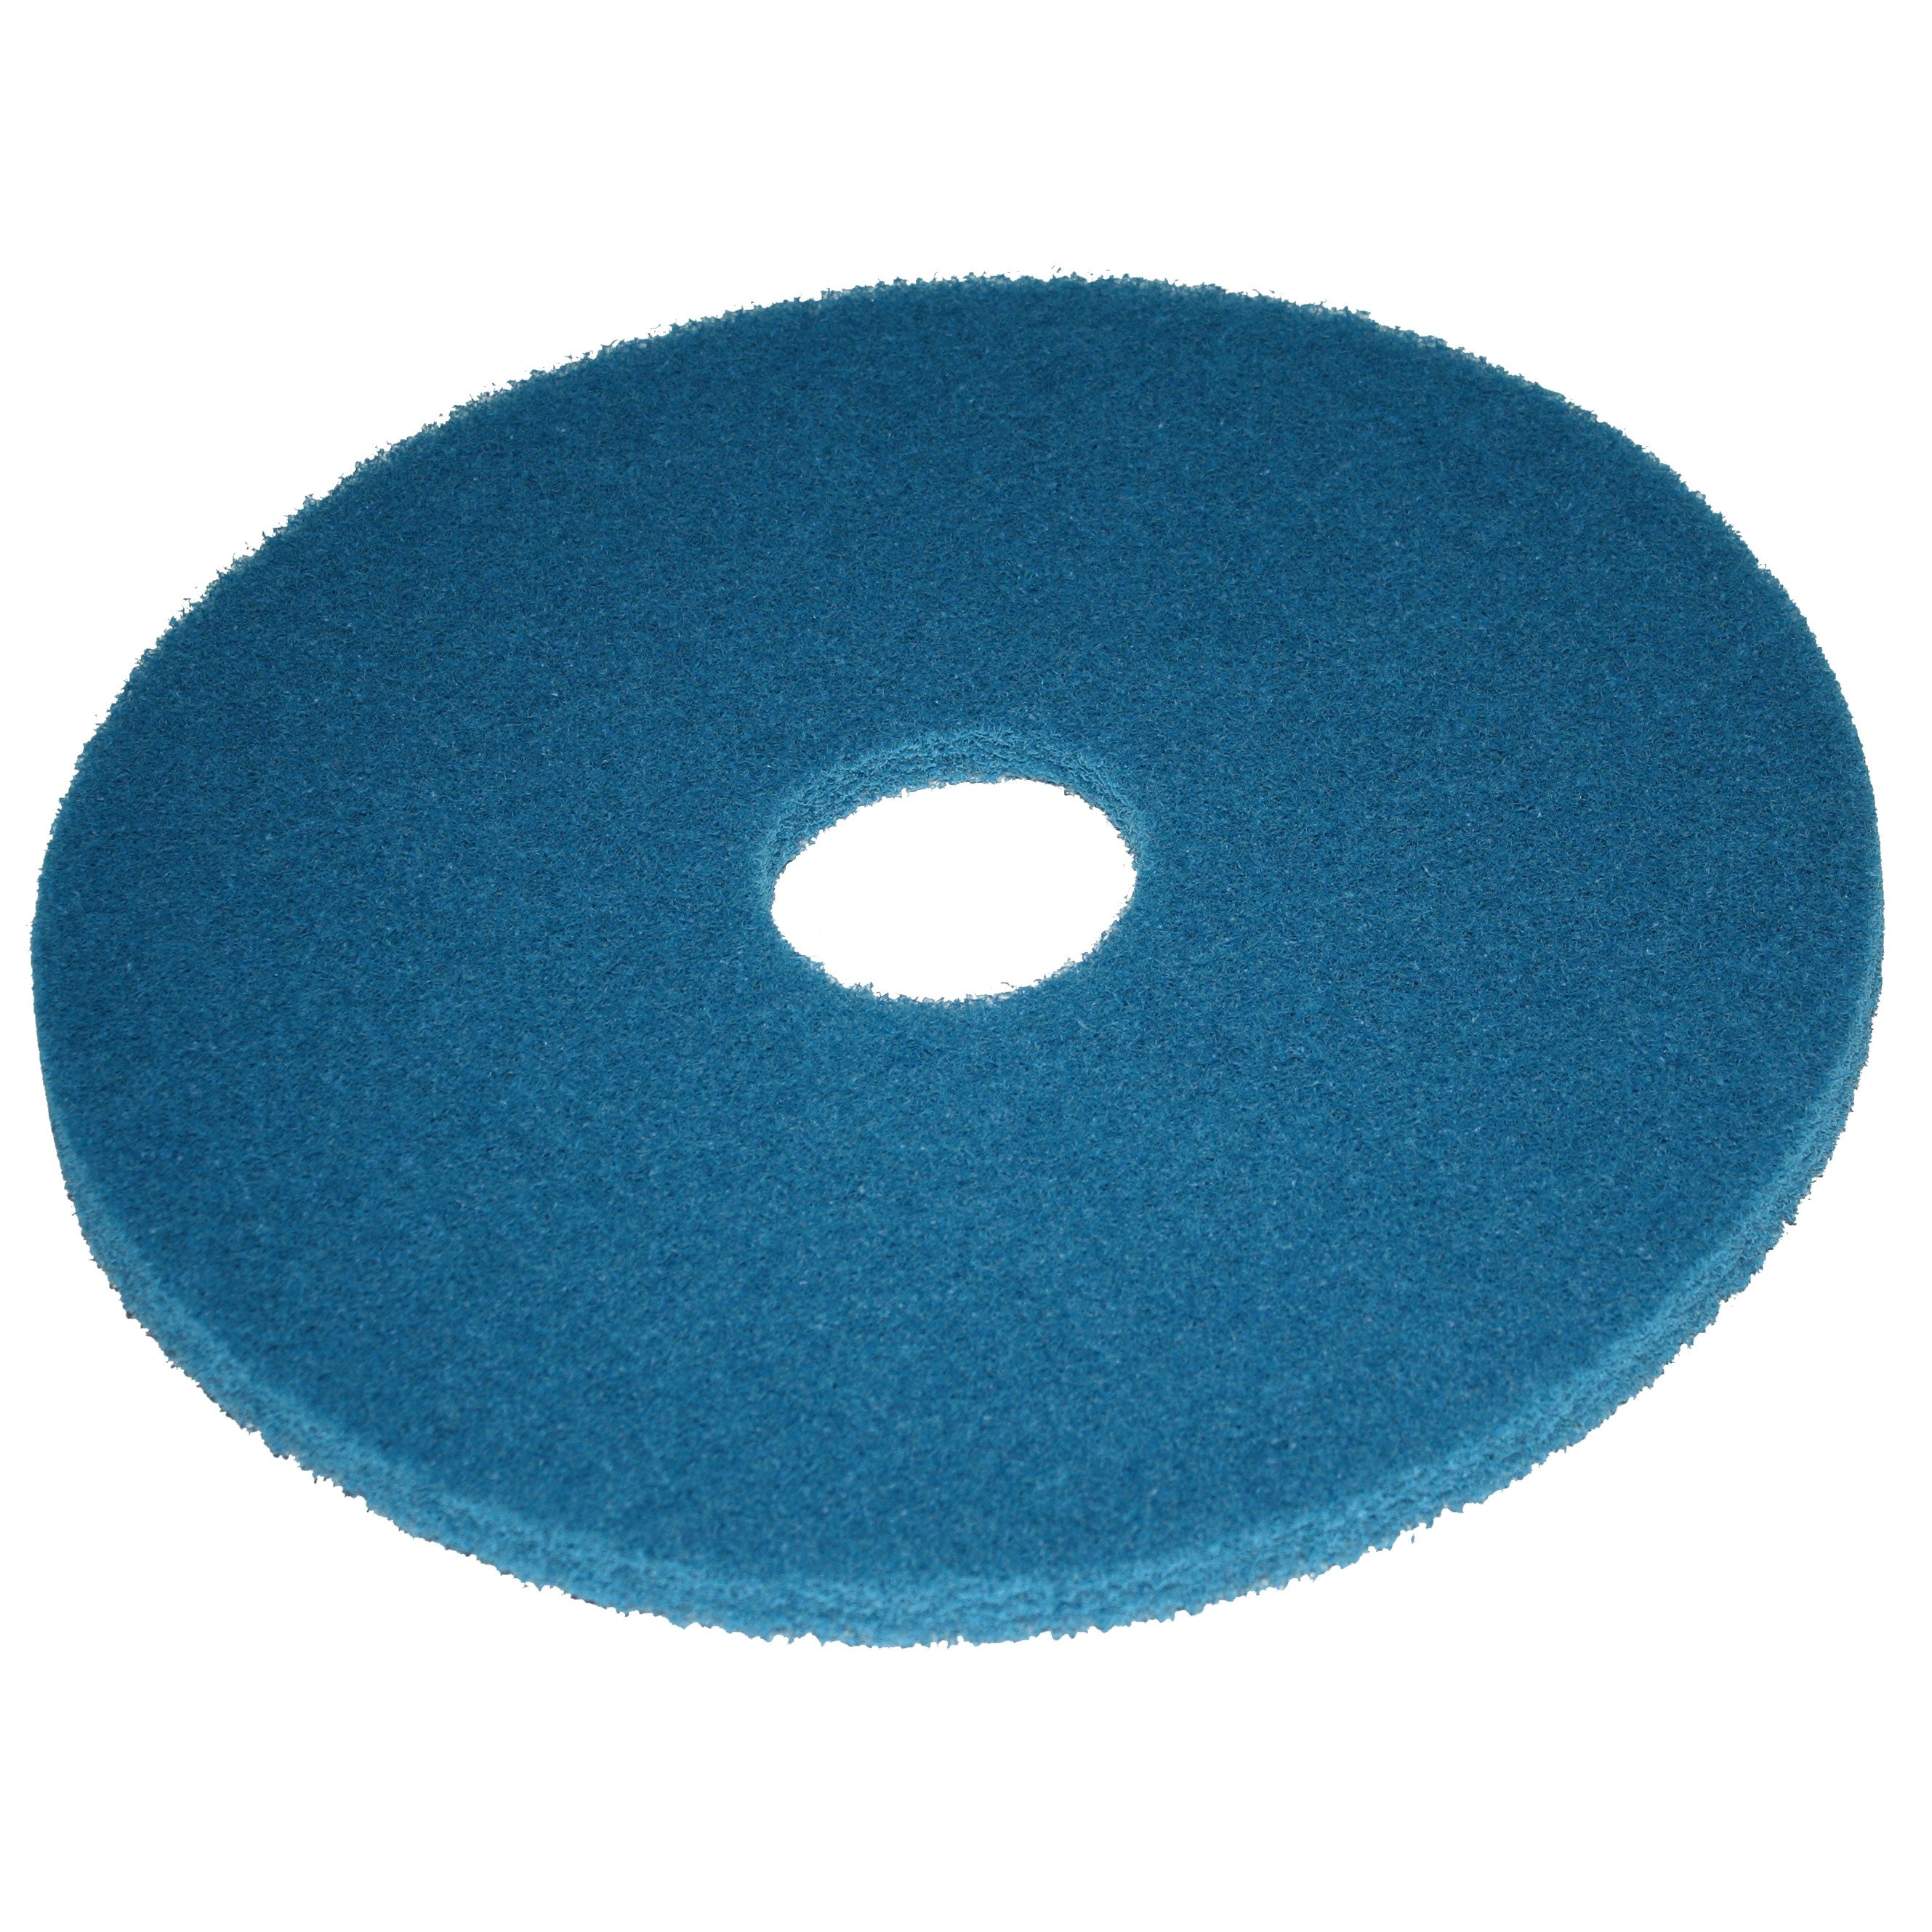 Pad blau, Ø 406 mm, Polyester